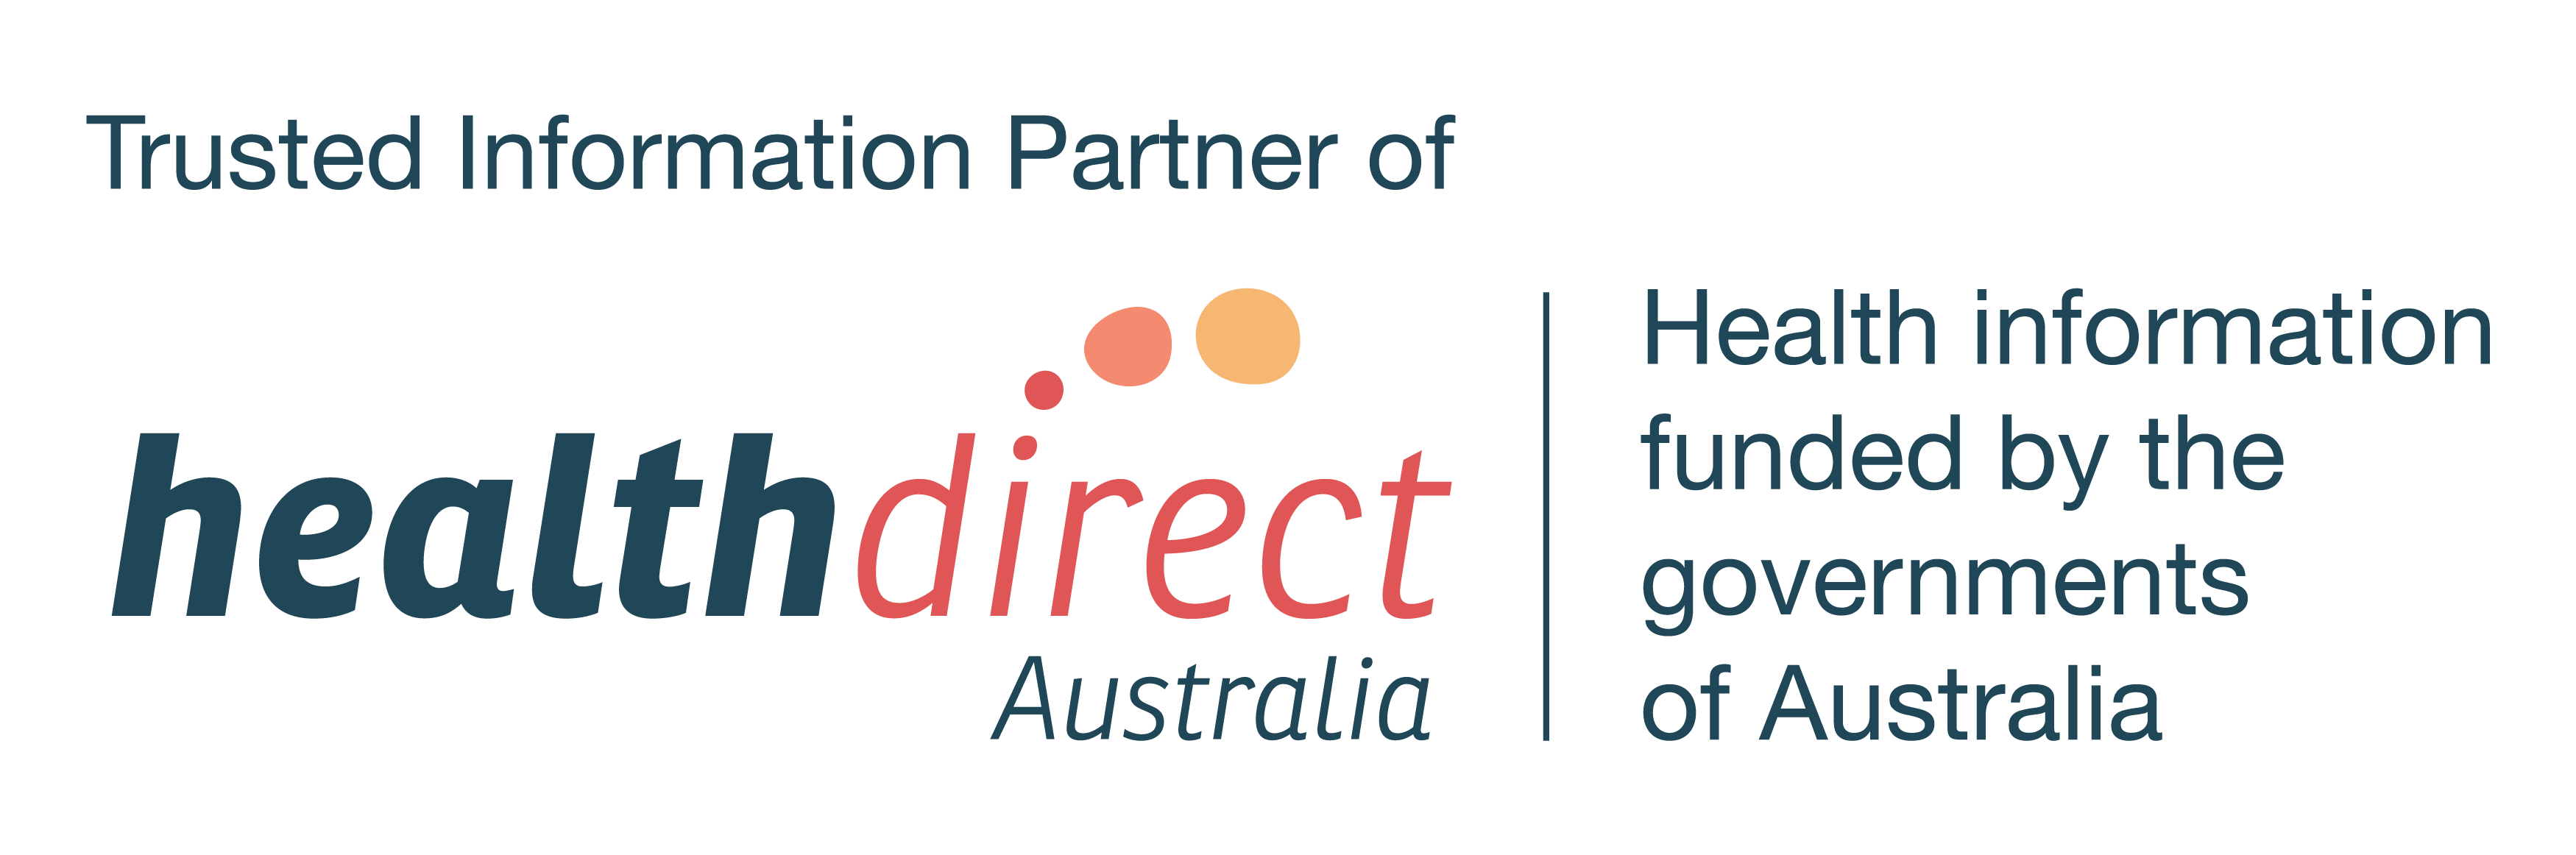 Healthdirect information partner logo